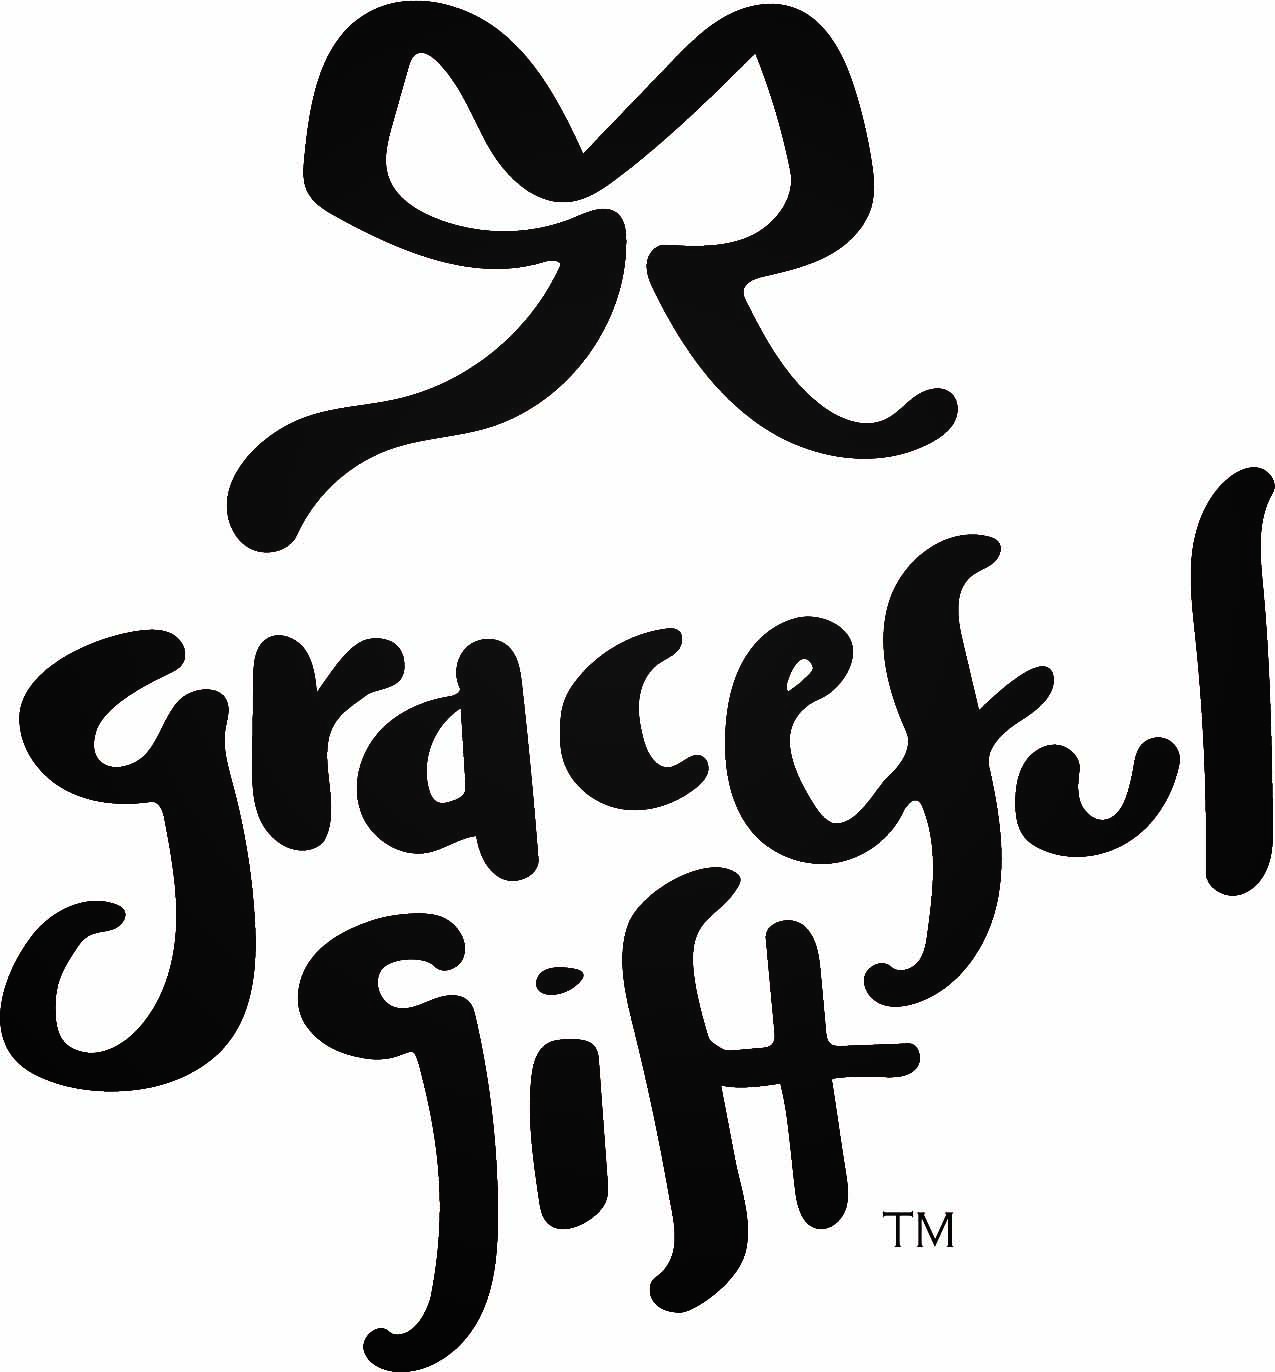 Graceful Gift Foundation